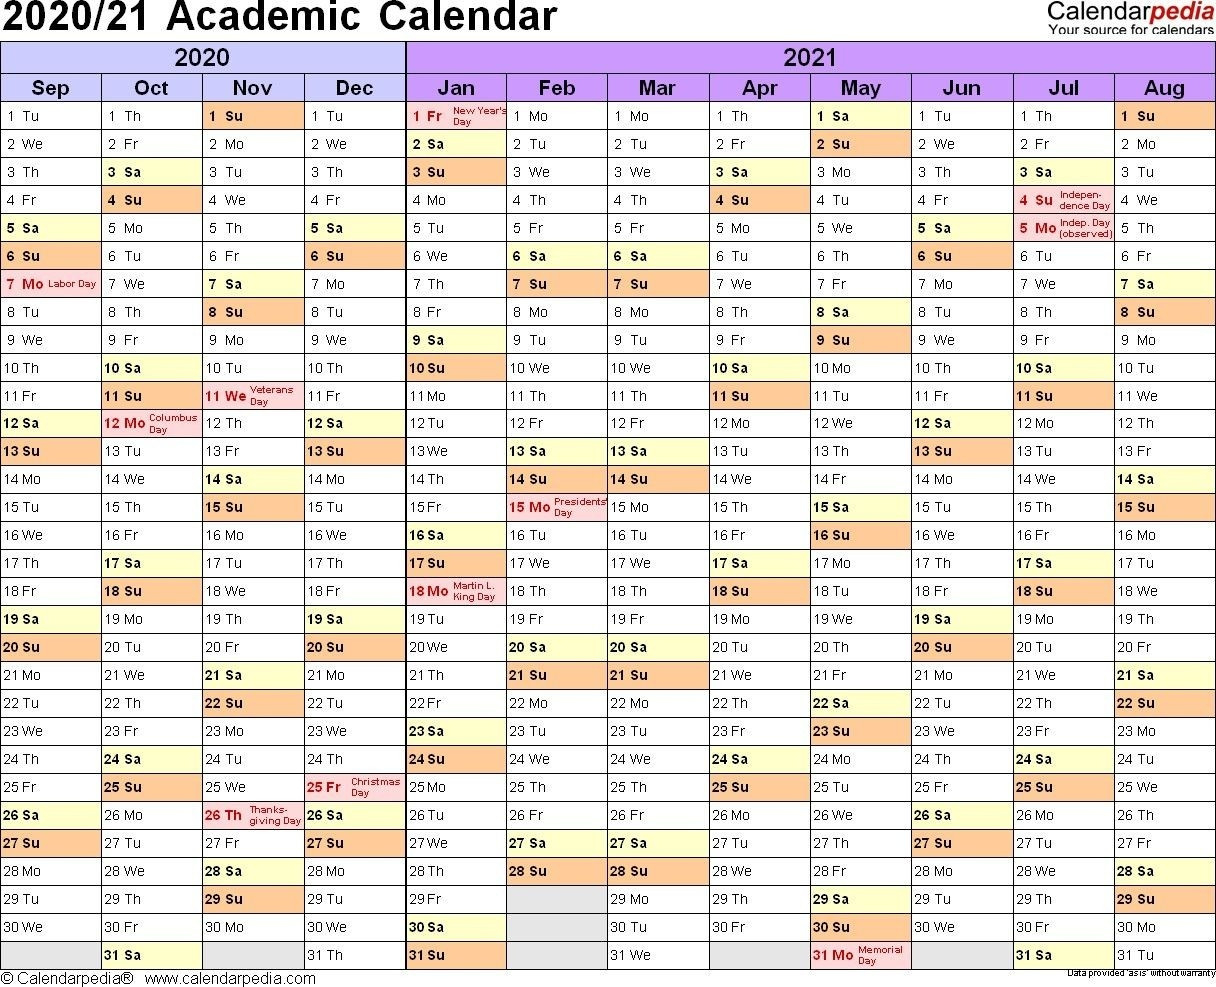 Depo Provera Calendar 2021 Calculator - Template Calendar  Depo Provera Dosing Chart 2021